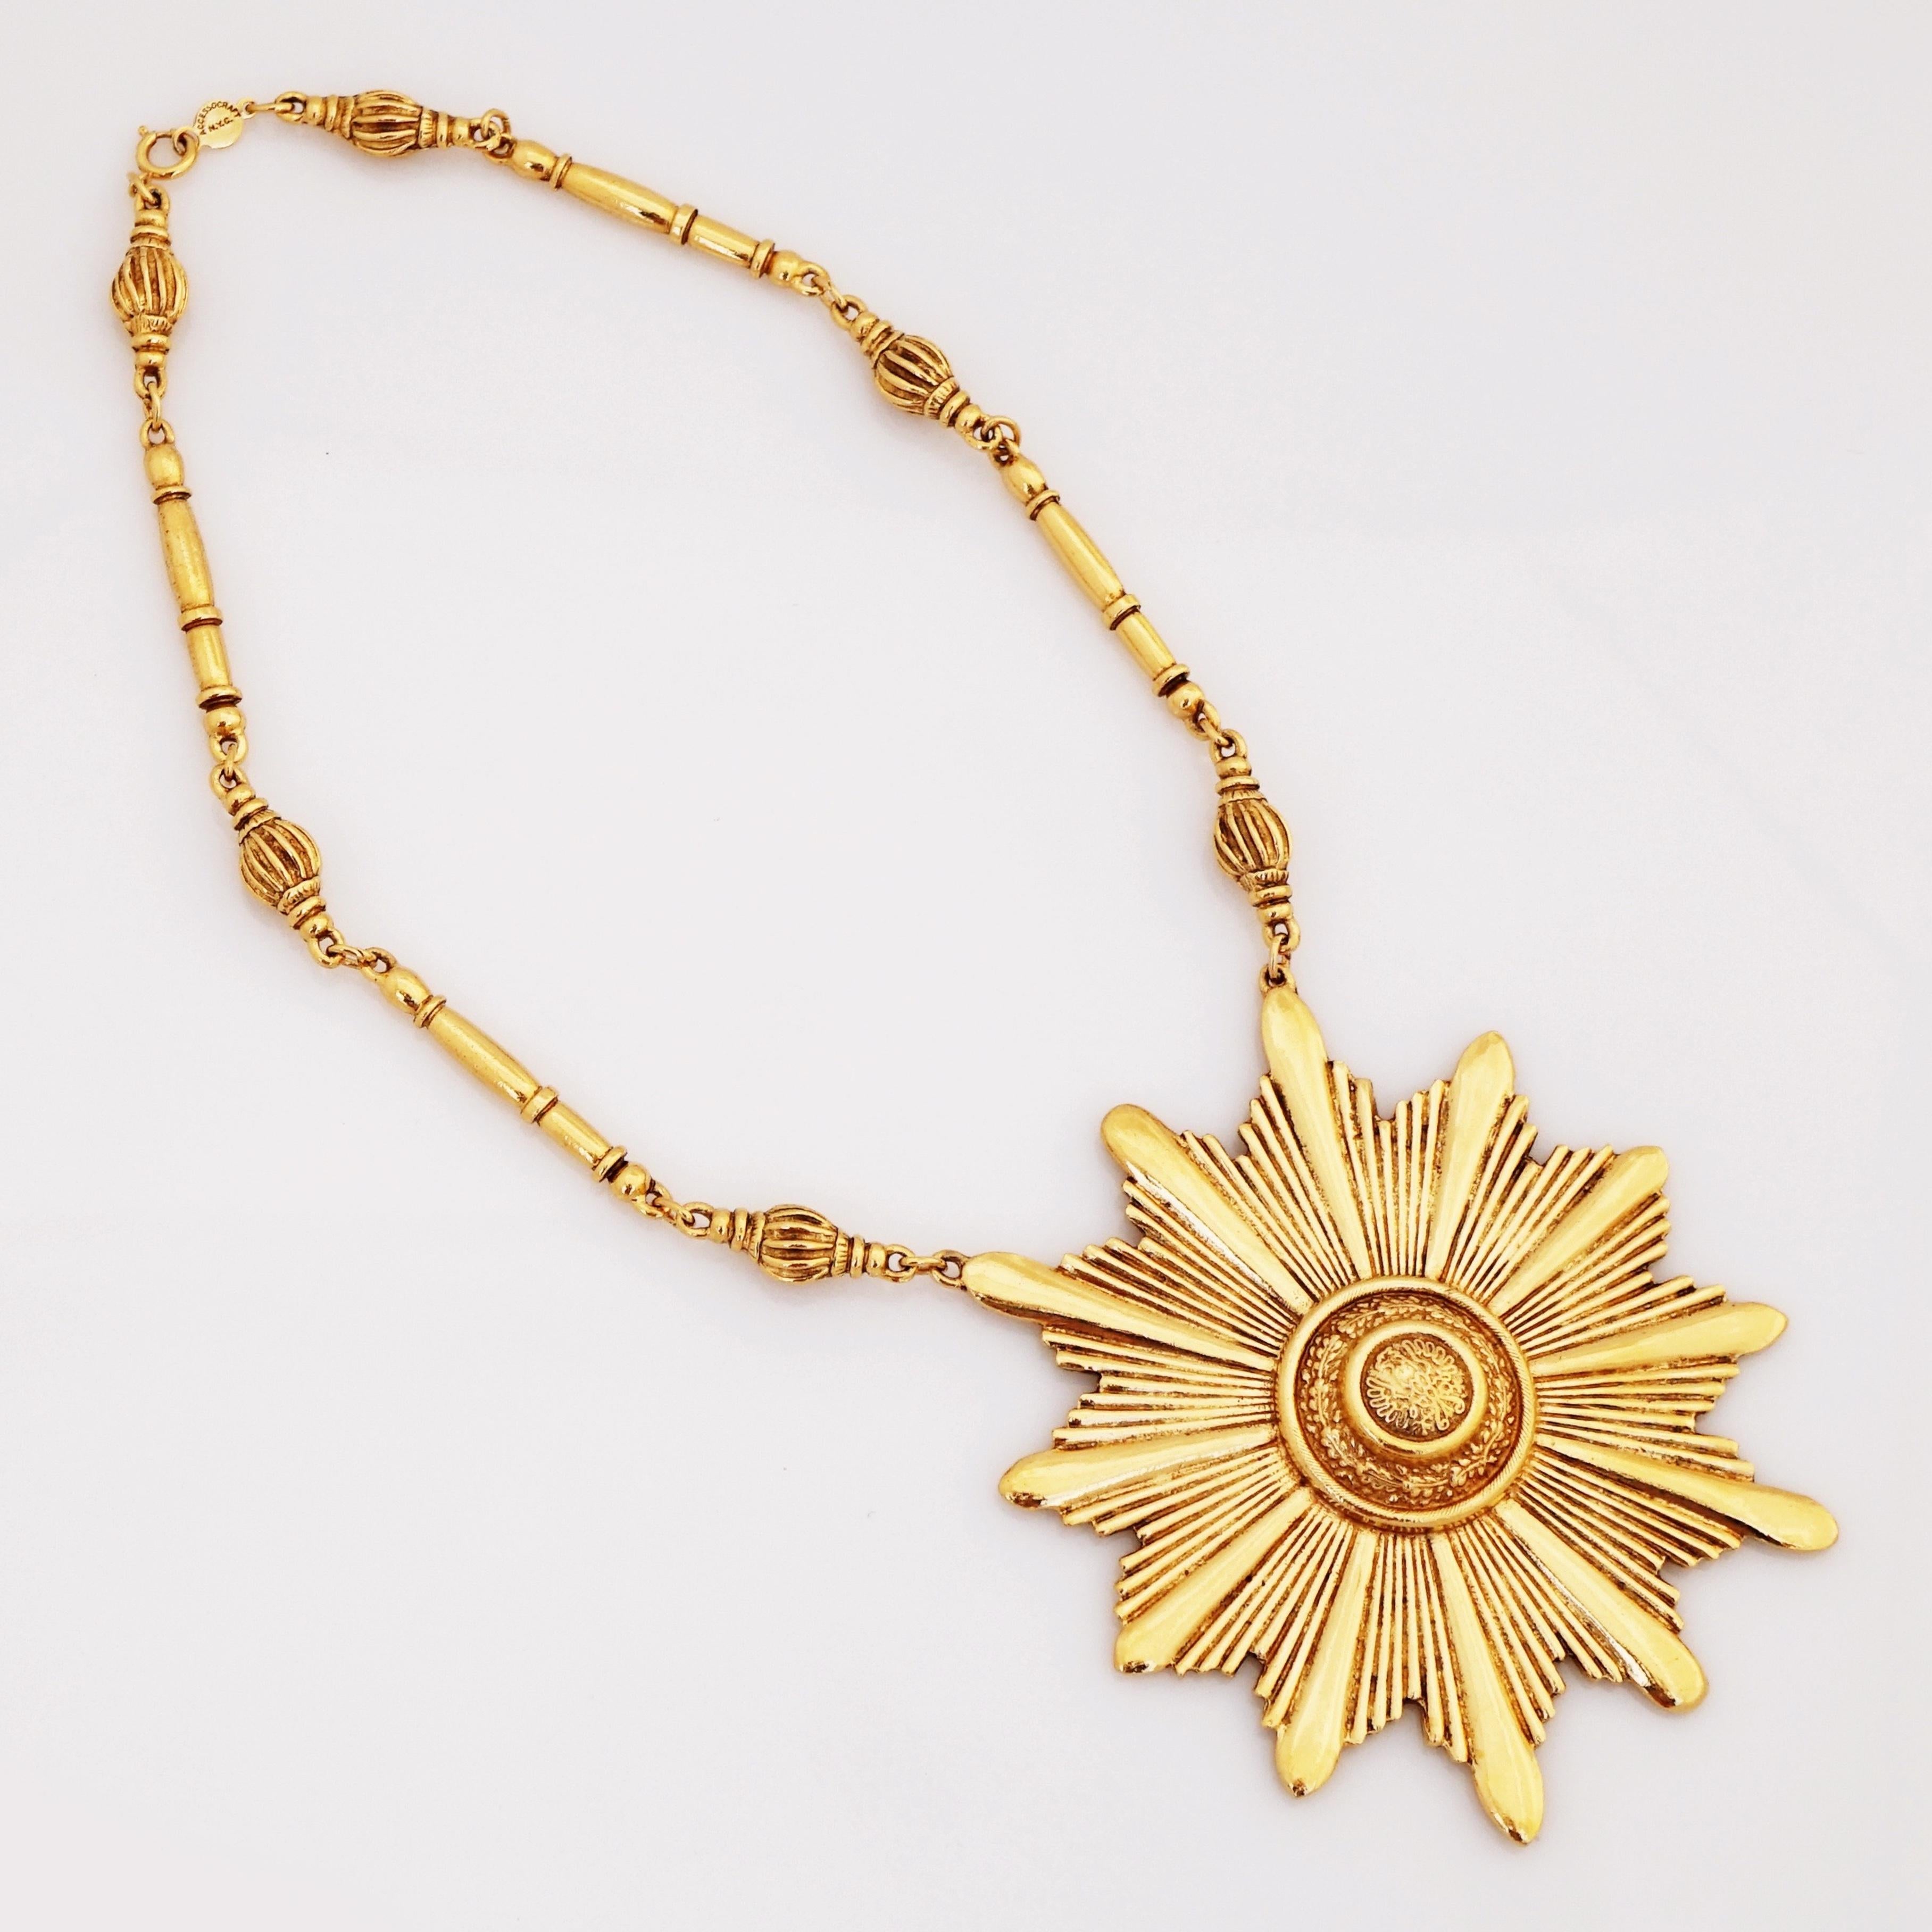 - Vintage item

- Collectible costume jewelry piece from the mid-century

- Sunburst / starburst motif

- 21